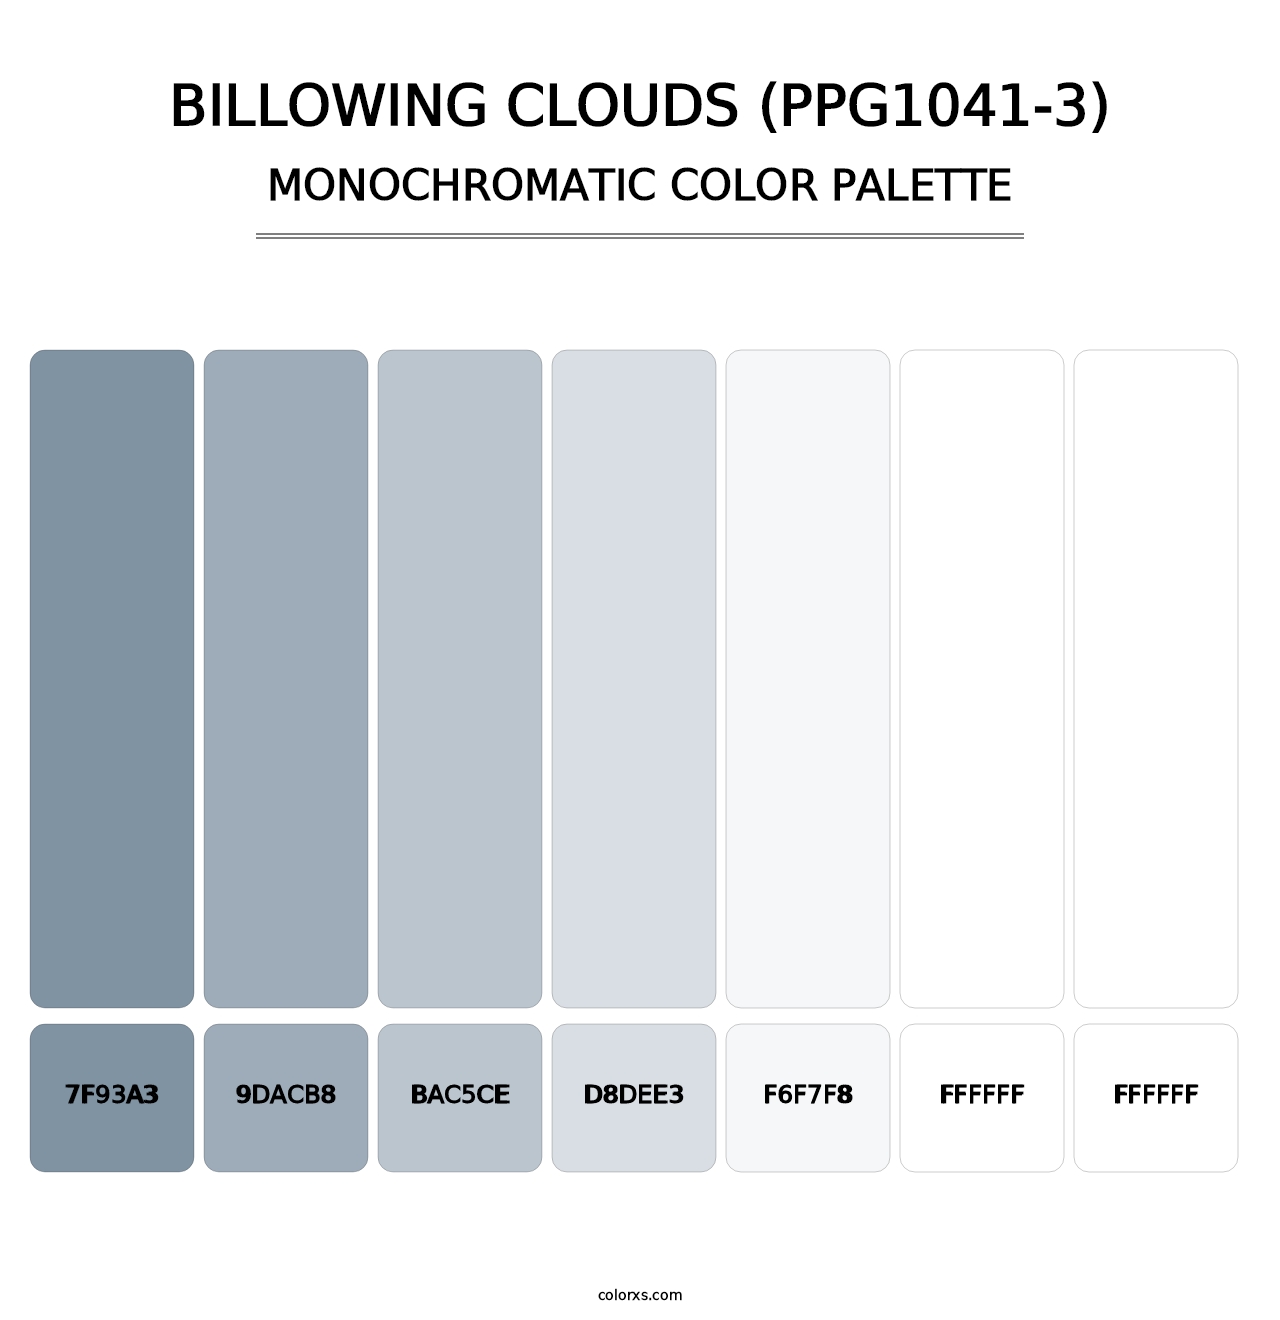 Billowing Clouds (PPG1041-3) - Monochromatic Color Palette